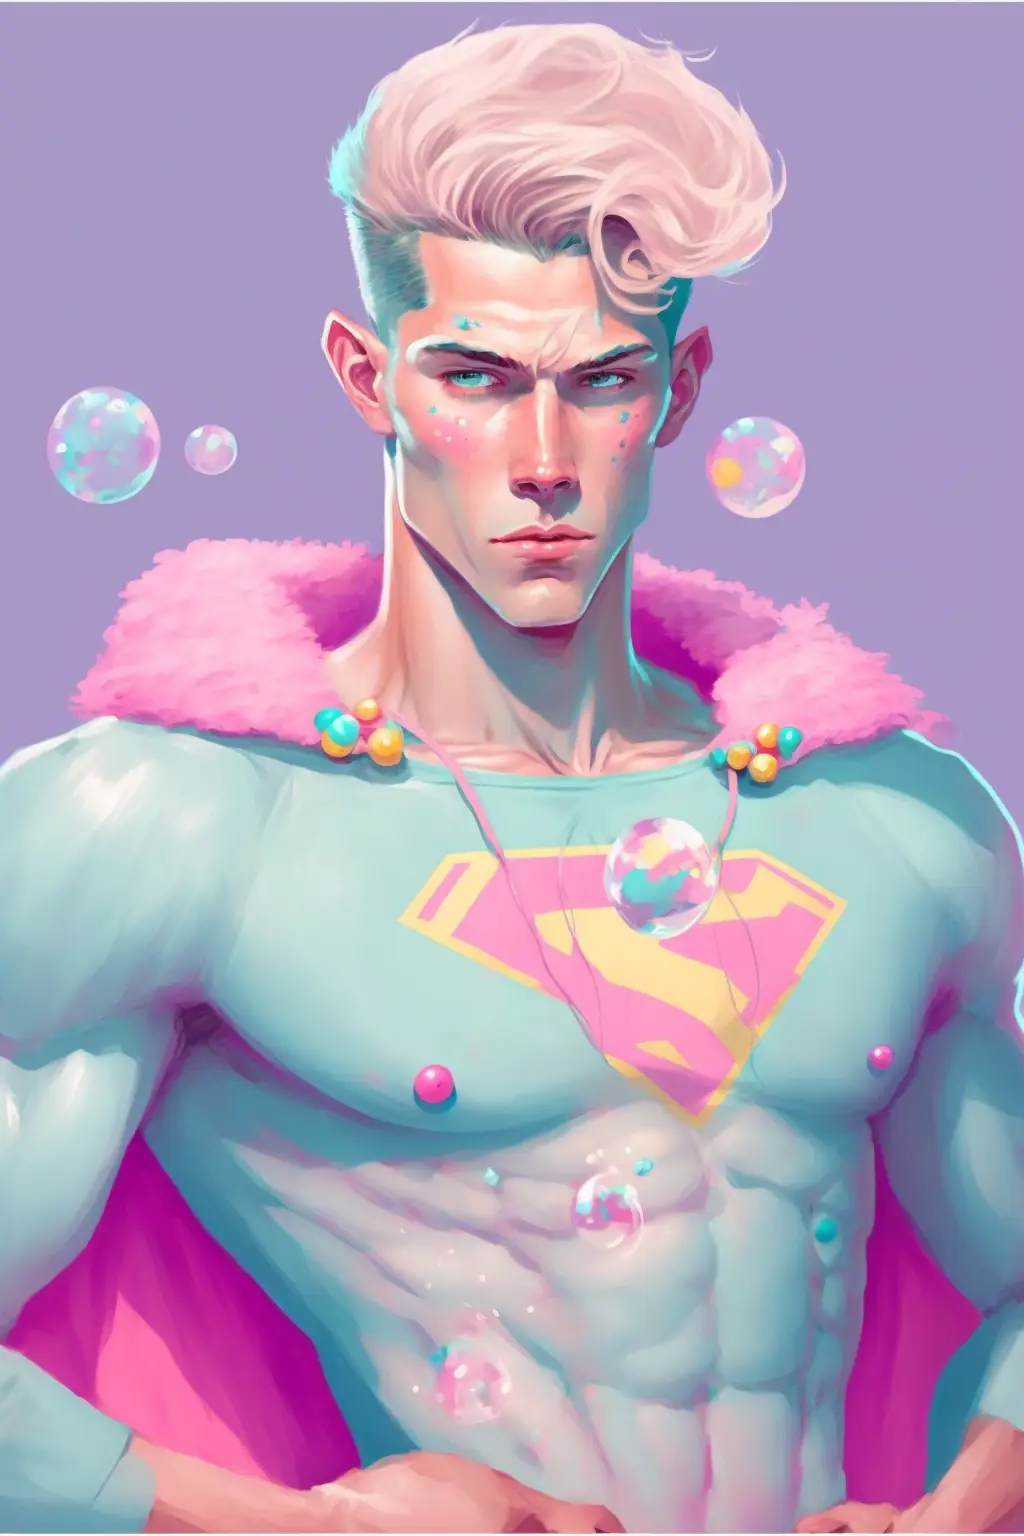 A Male Candy Superhero Pastel Colors